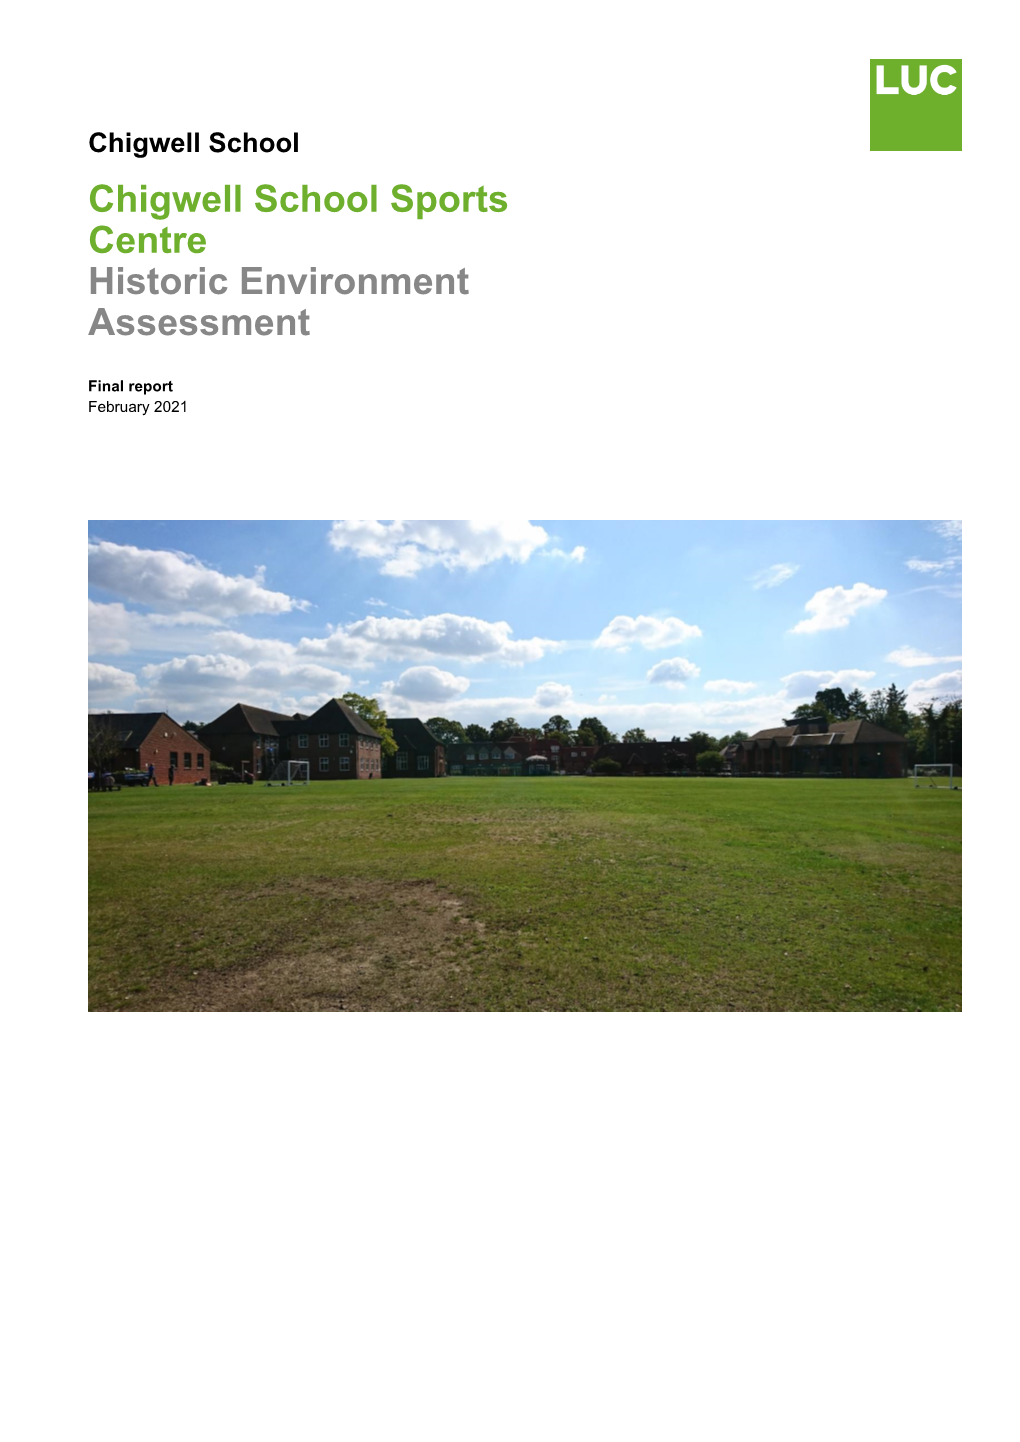 Chigwell School Sports Centre Historic Environment Assessment